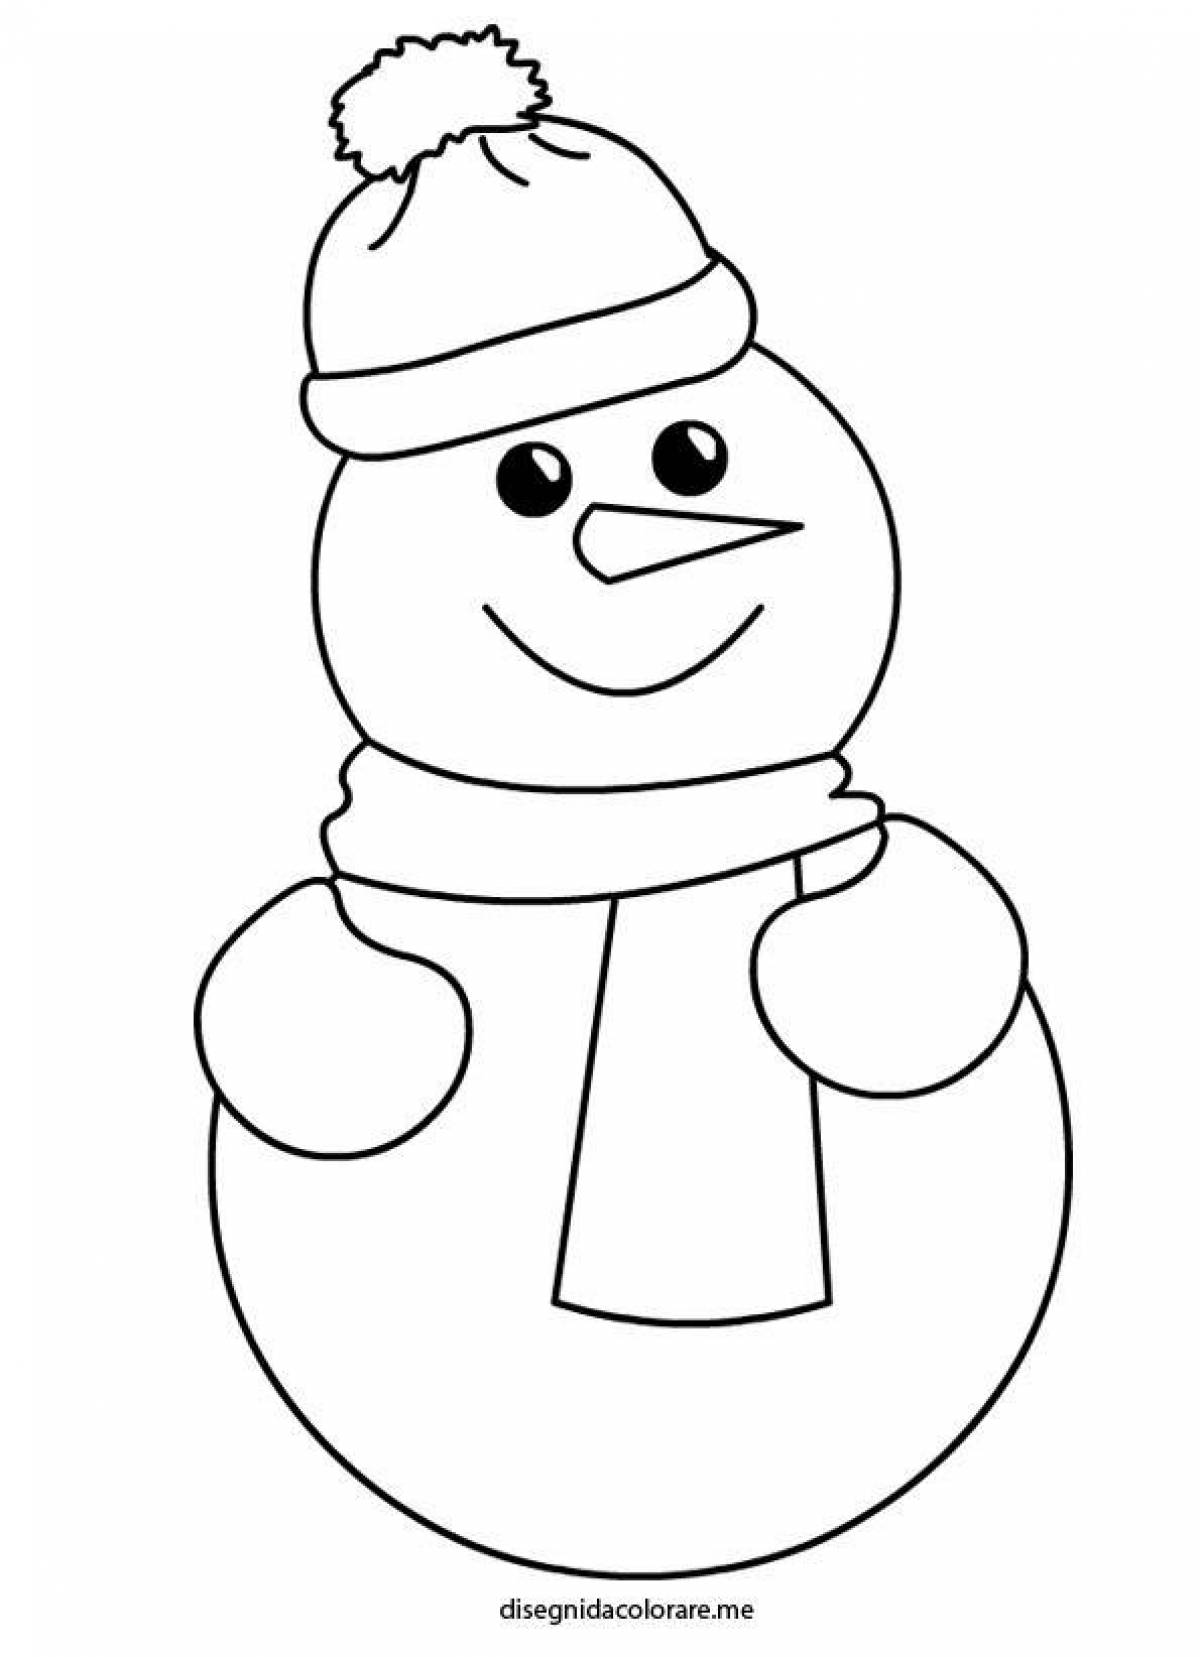 Violent snowman coloring book for kids